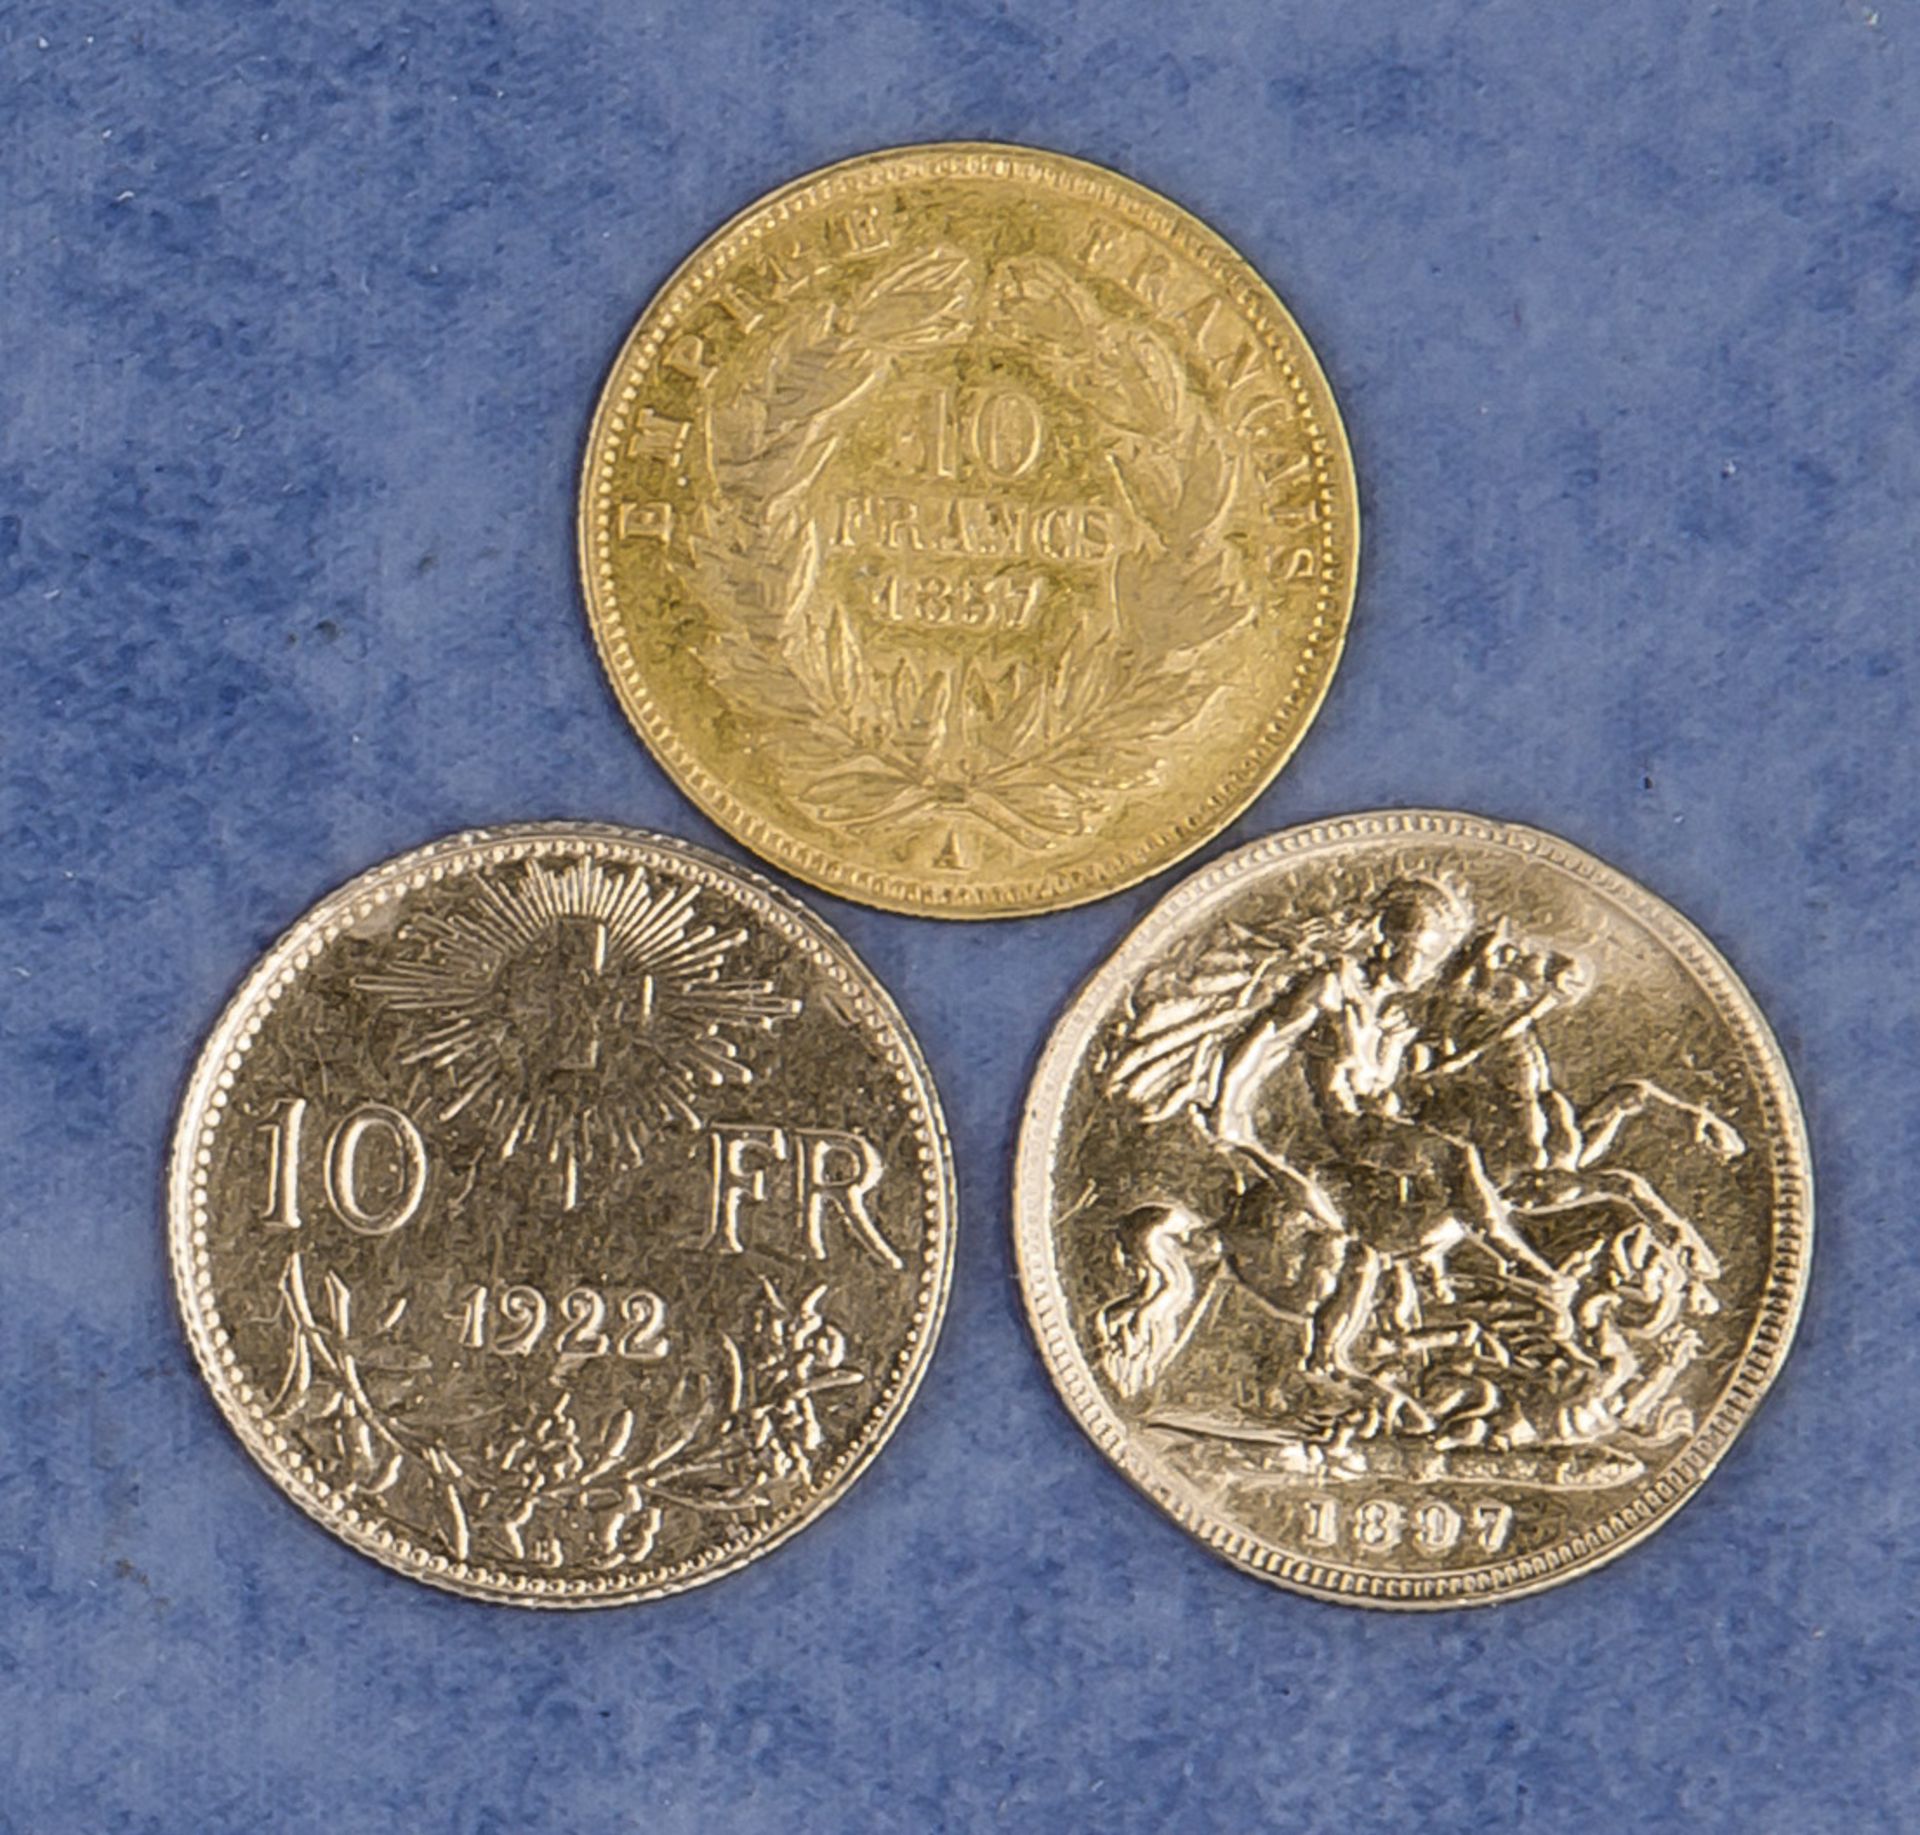 Konvolut 3 Goldmünzen GG 900/000 10 Franc 1922 B, 10 Francs 1857 A, England 1897 S HalfSovereign - Image 2 of 2